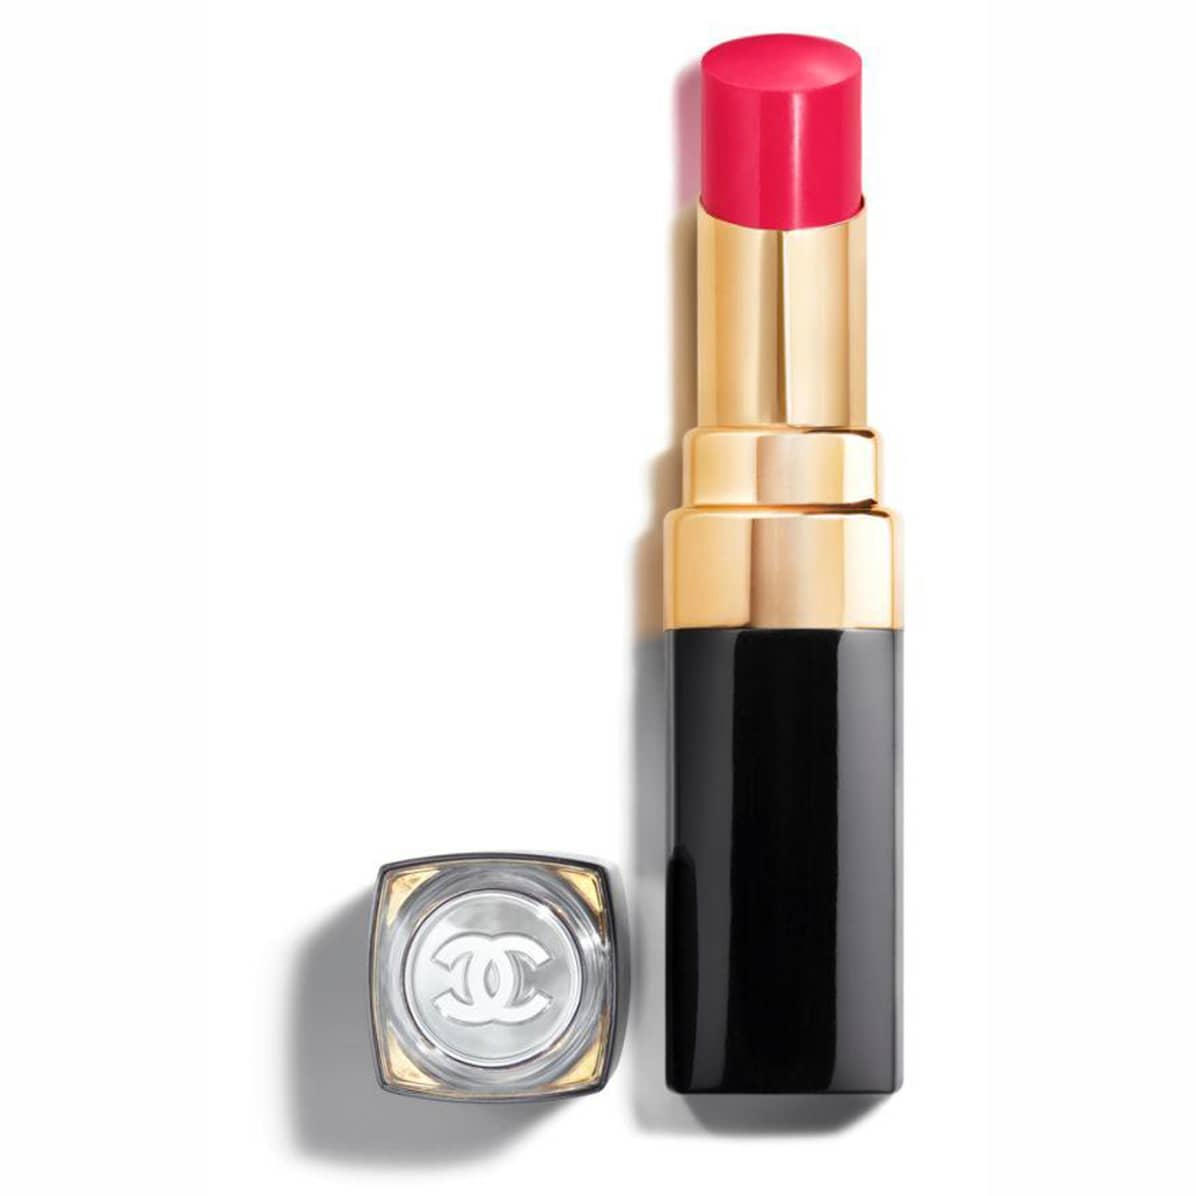 Chanel Rouge Coco Flash Lipstick Furtive 86